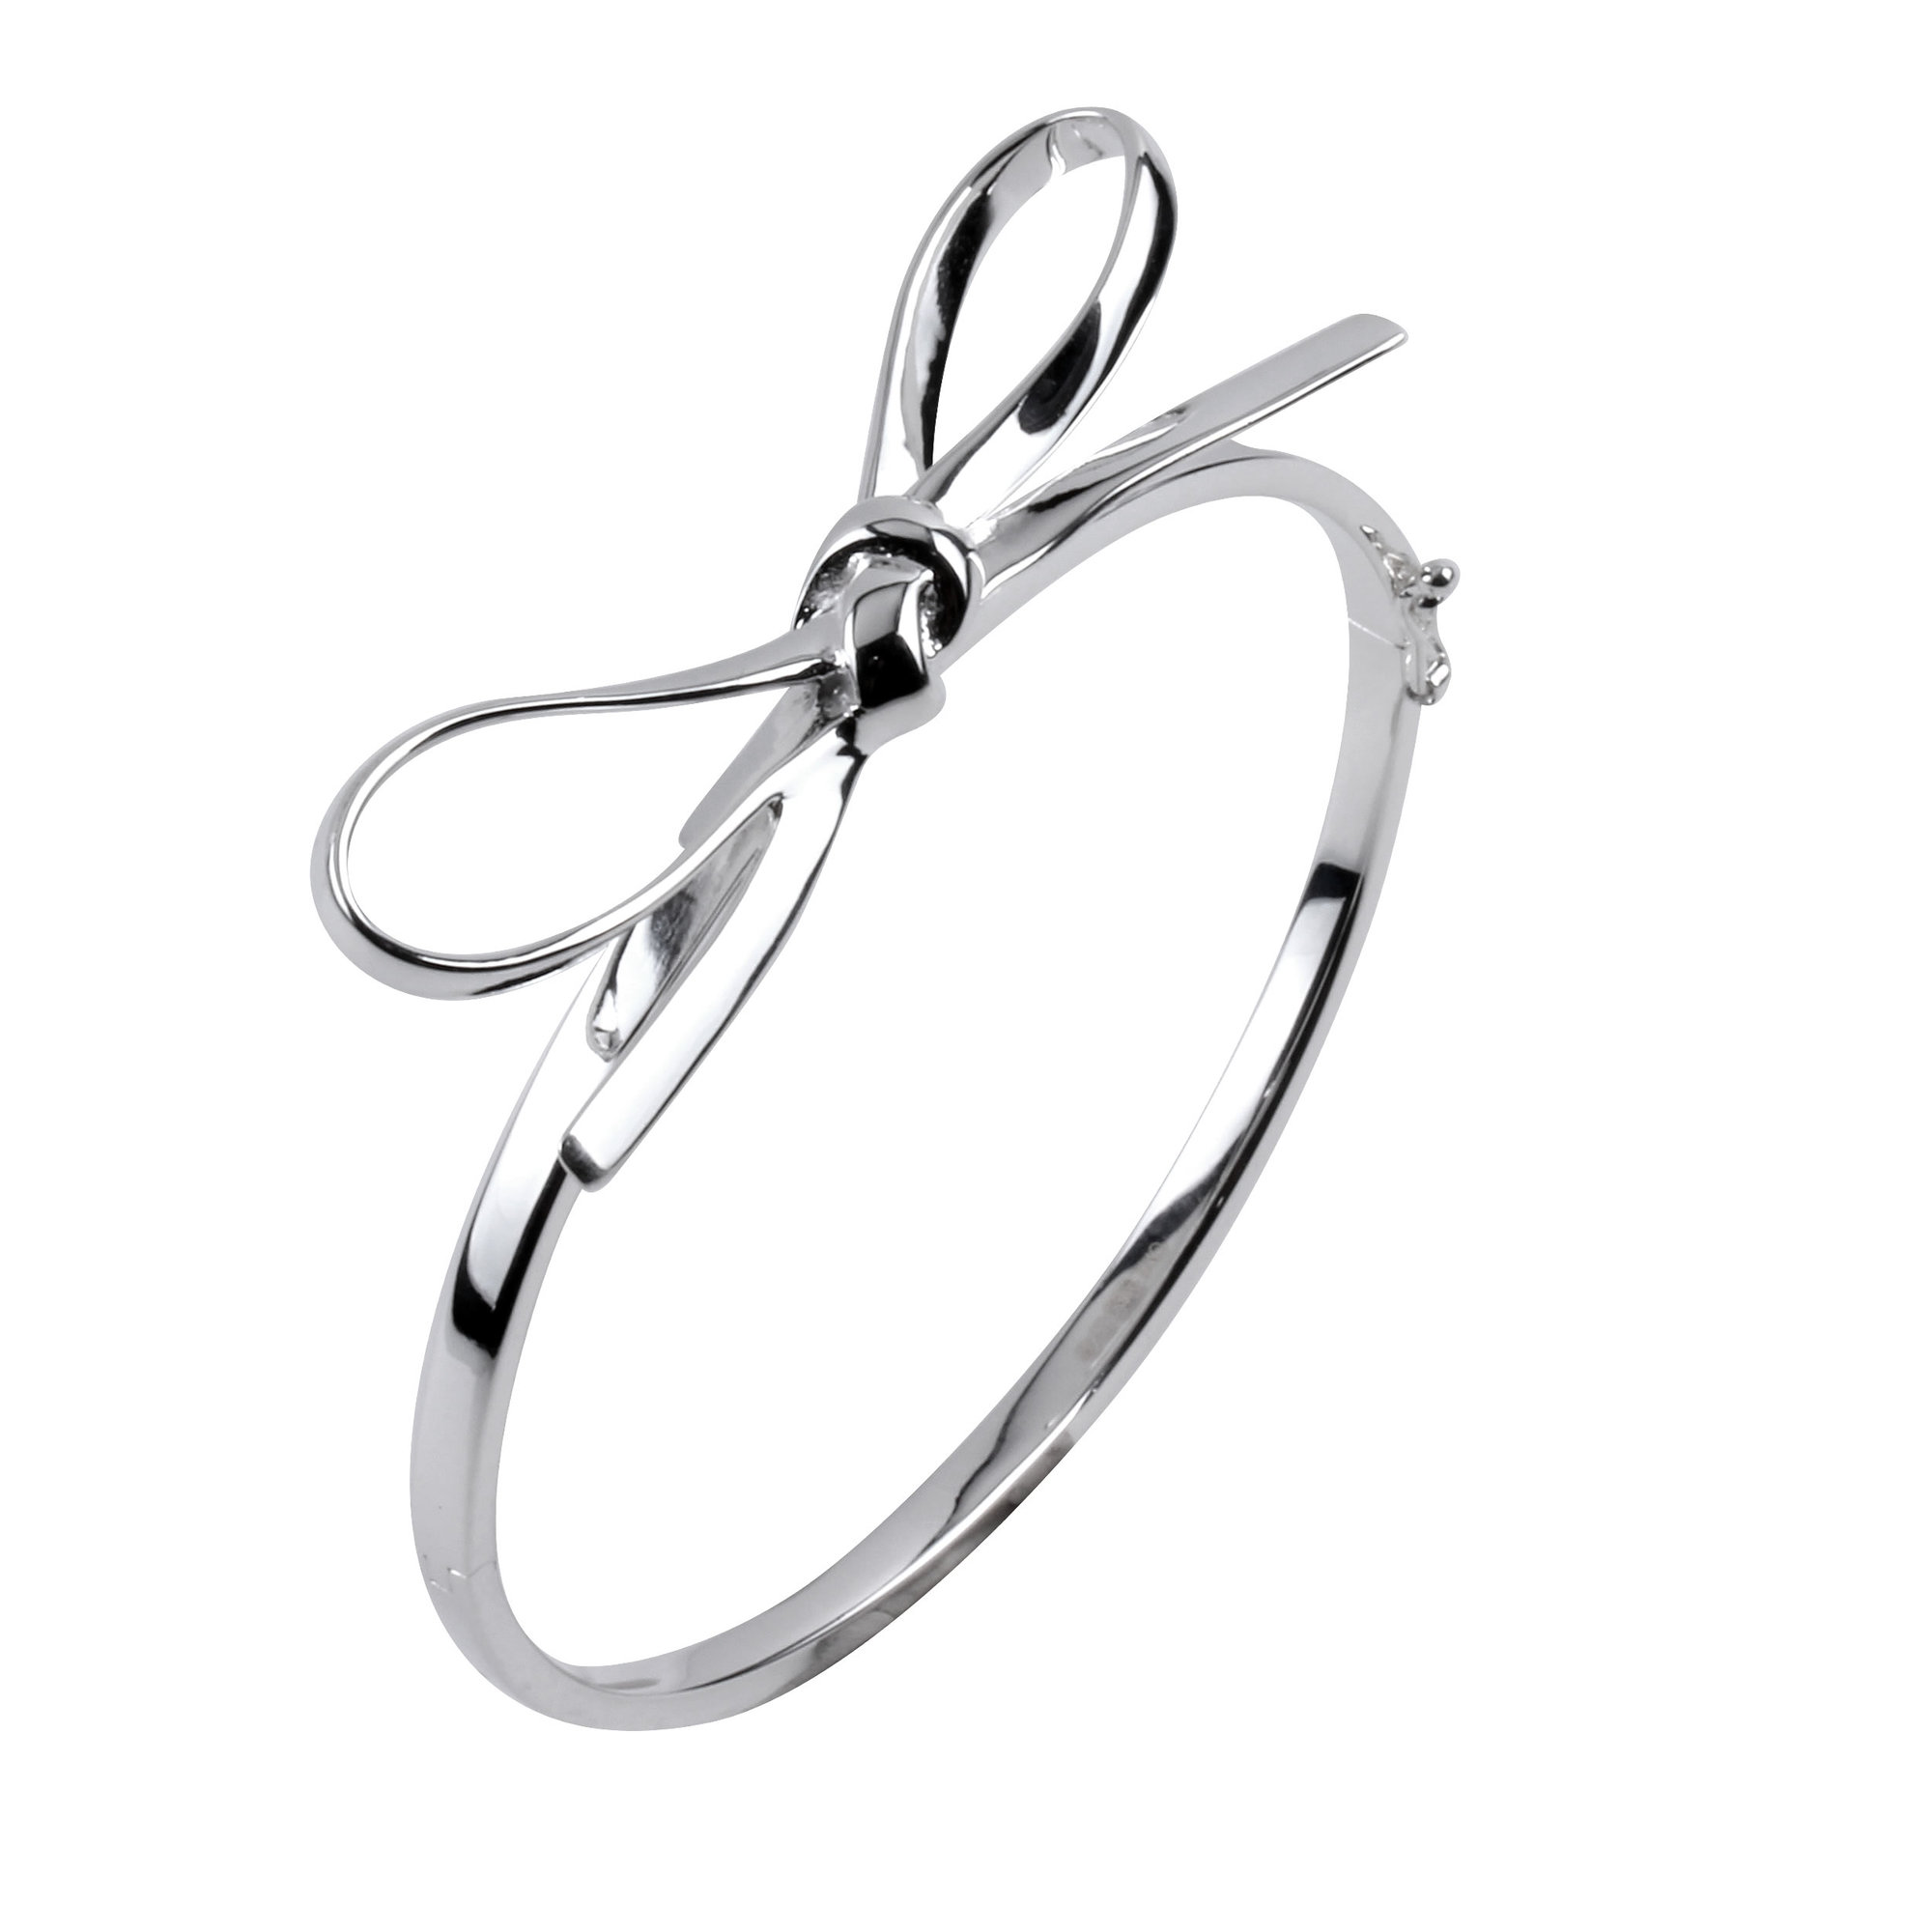 Sterling Silver Bow Bangle Bracelet Fashion Girls Jewelry Gift | eBay